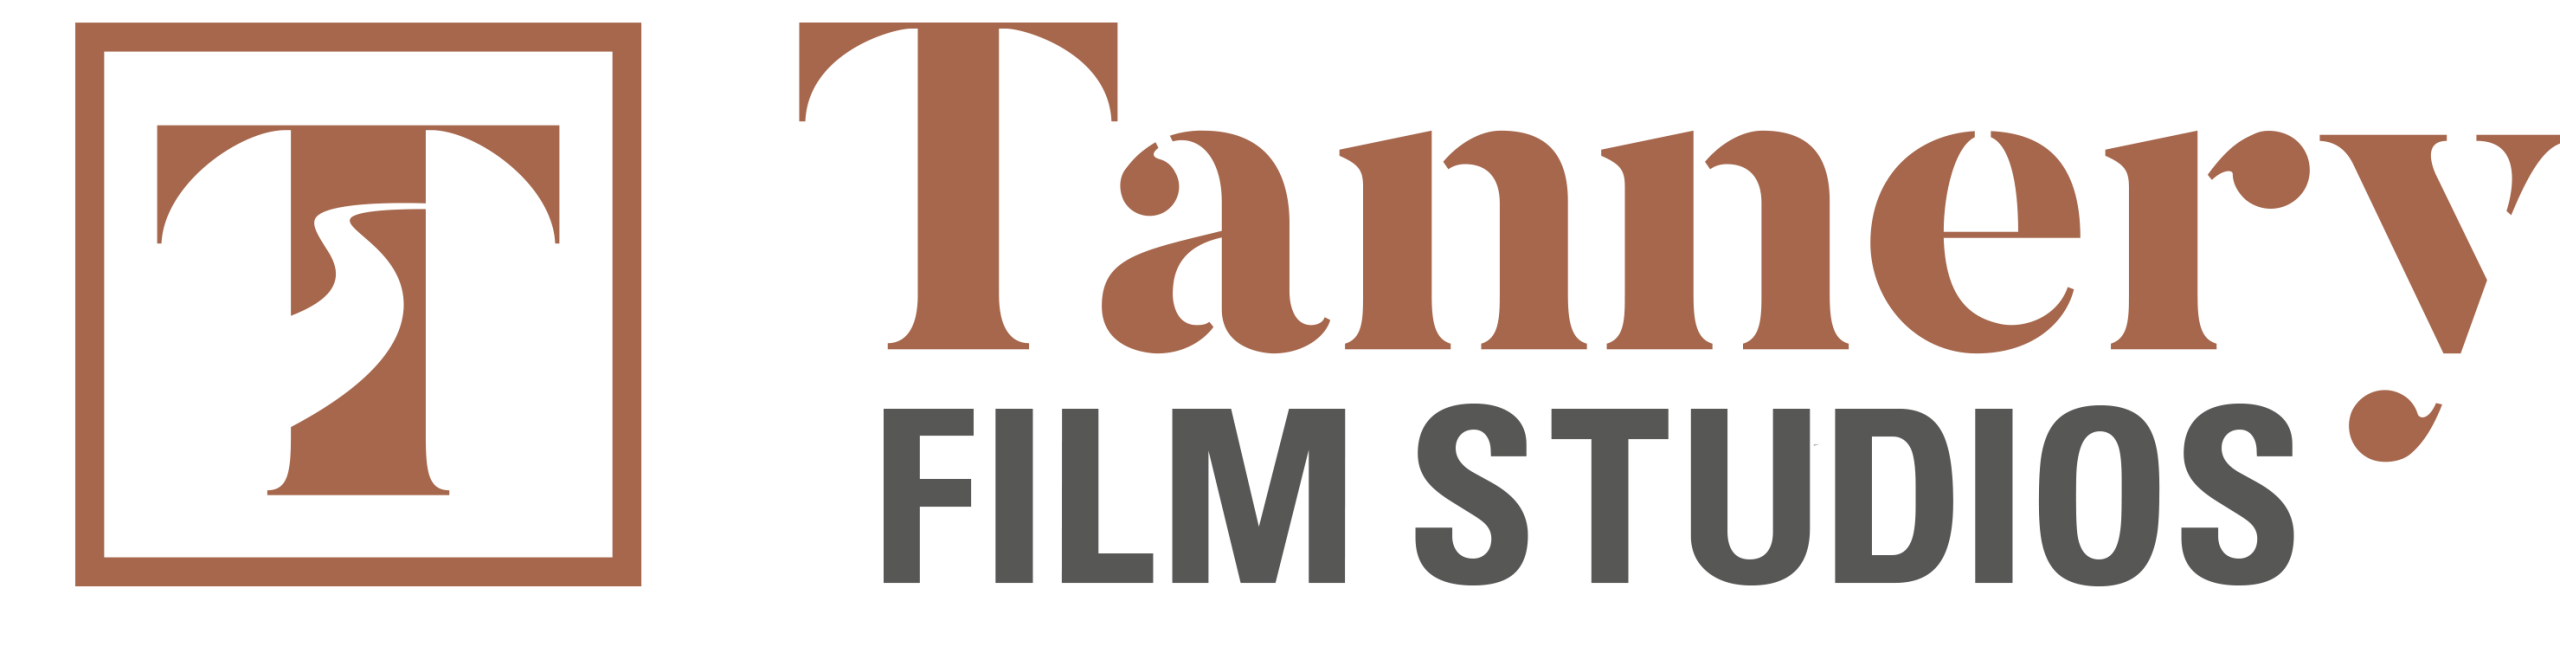 Tannery Film Studios Site Logo